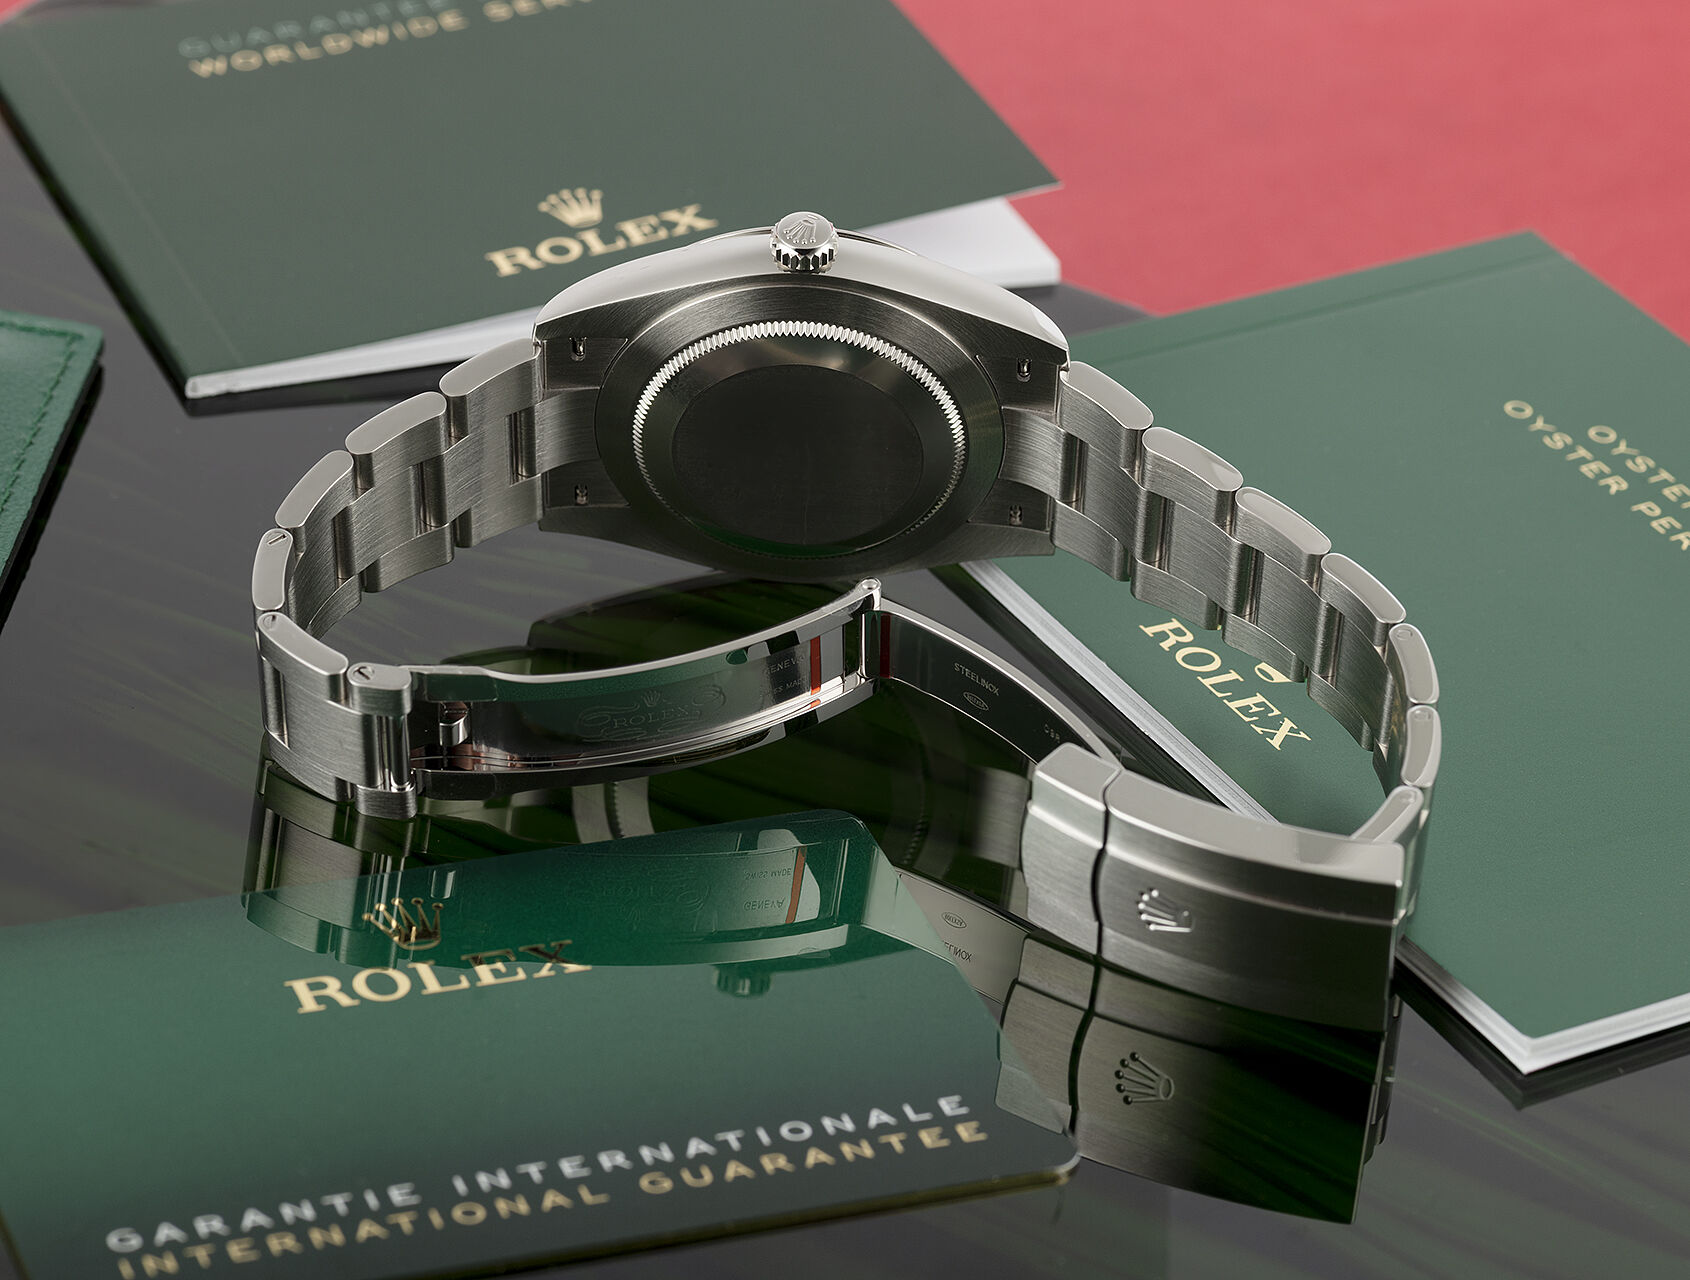 ref 124300 | Rolex Warranty to 2026 | Rolex Oyster Perpetual